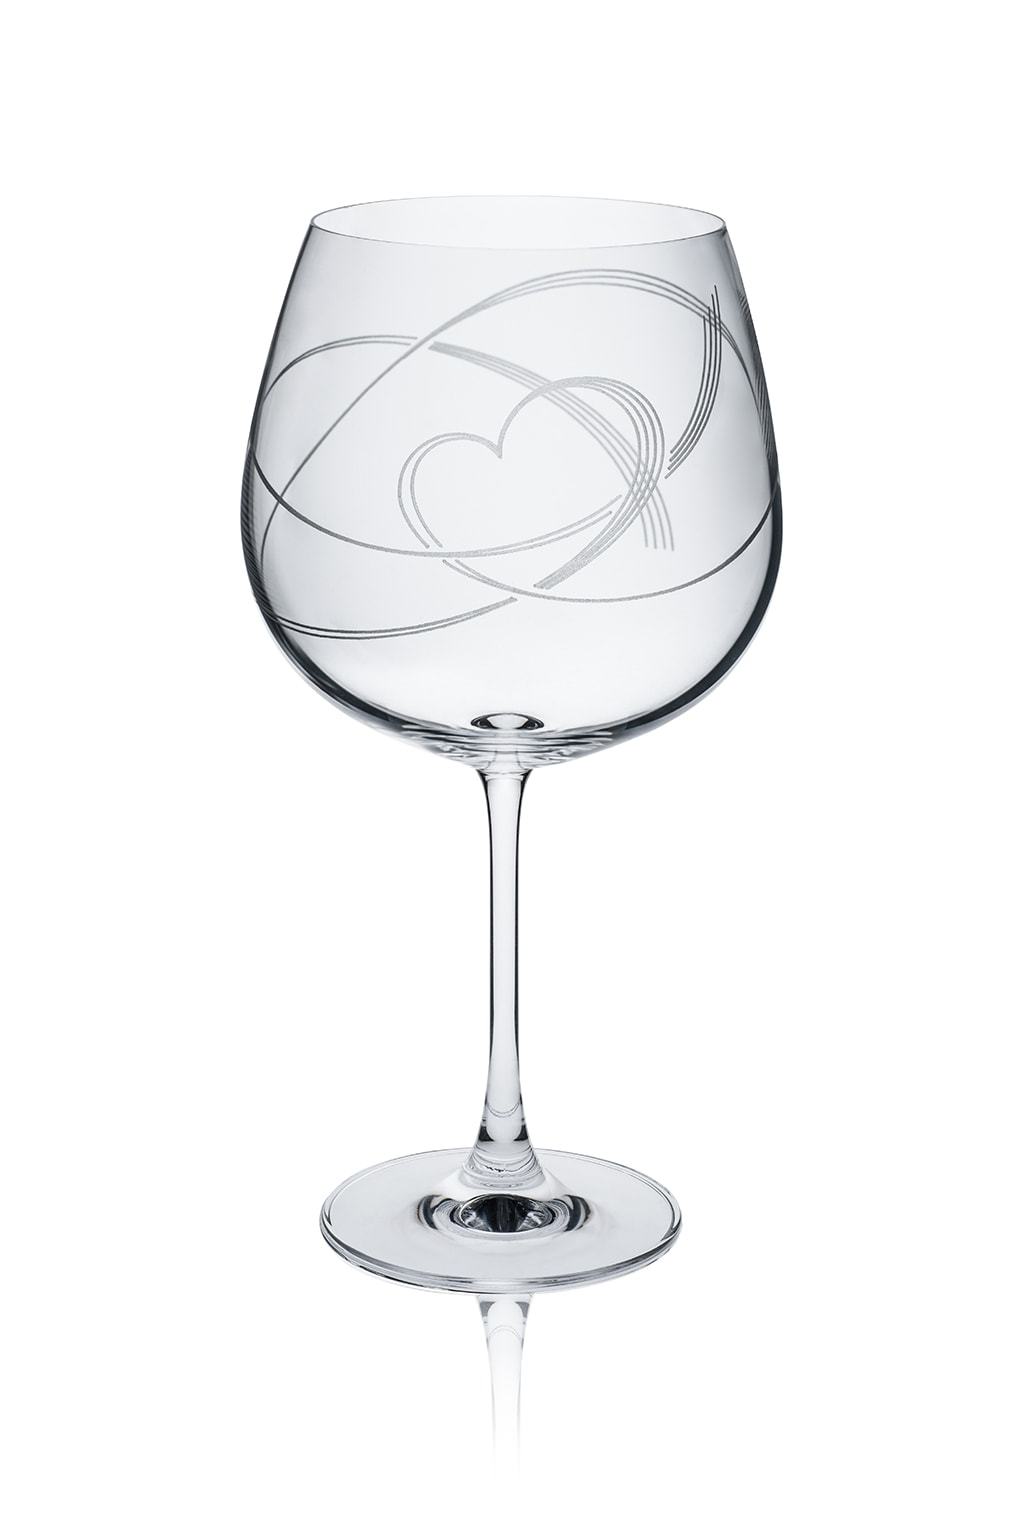 Swirl Heart Gin Glass - part of set of 6 drinking glasses